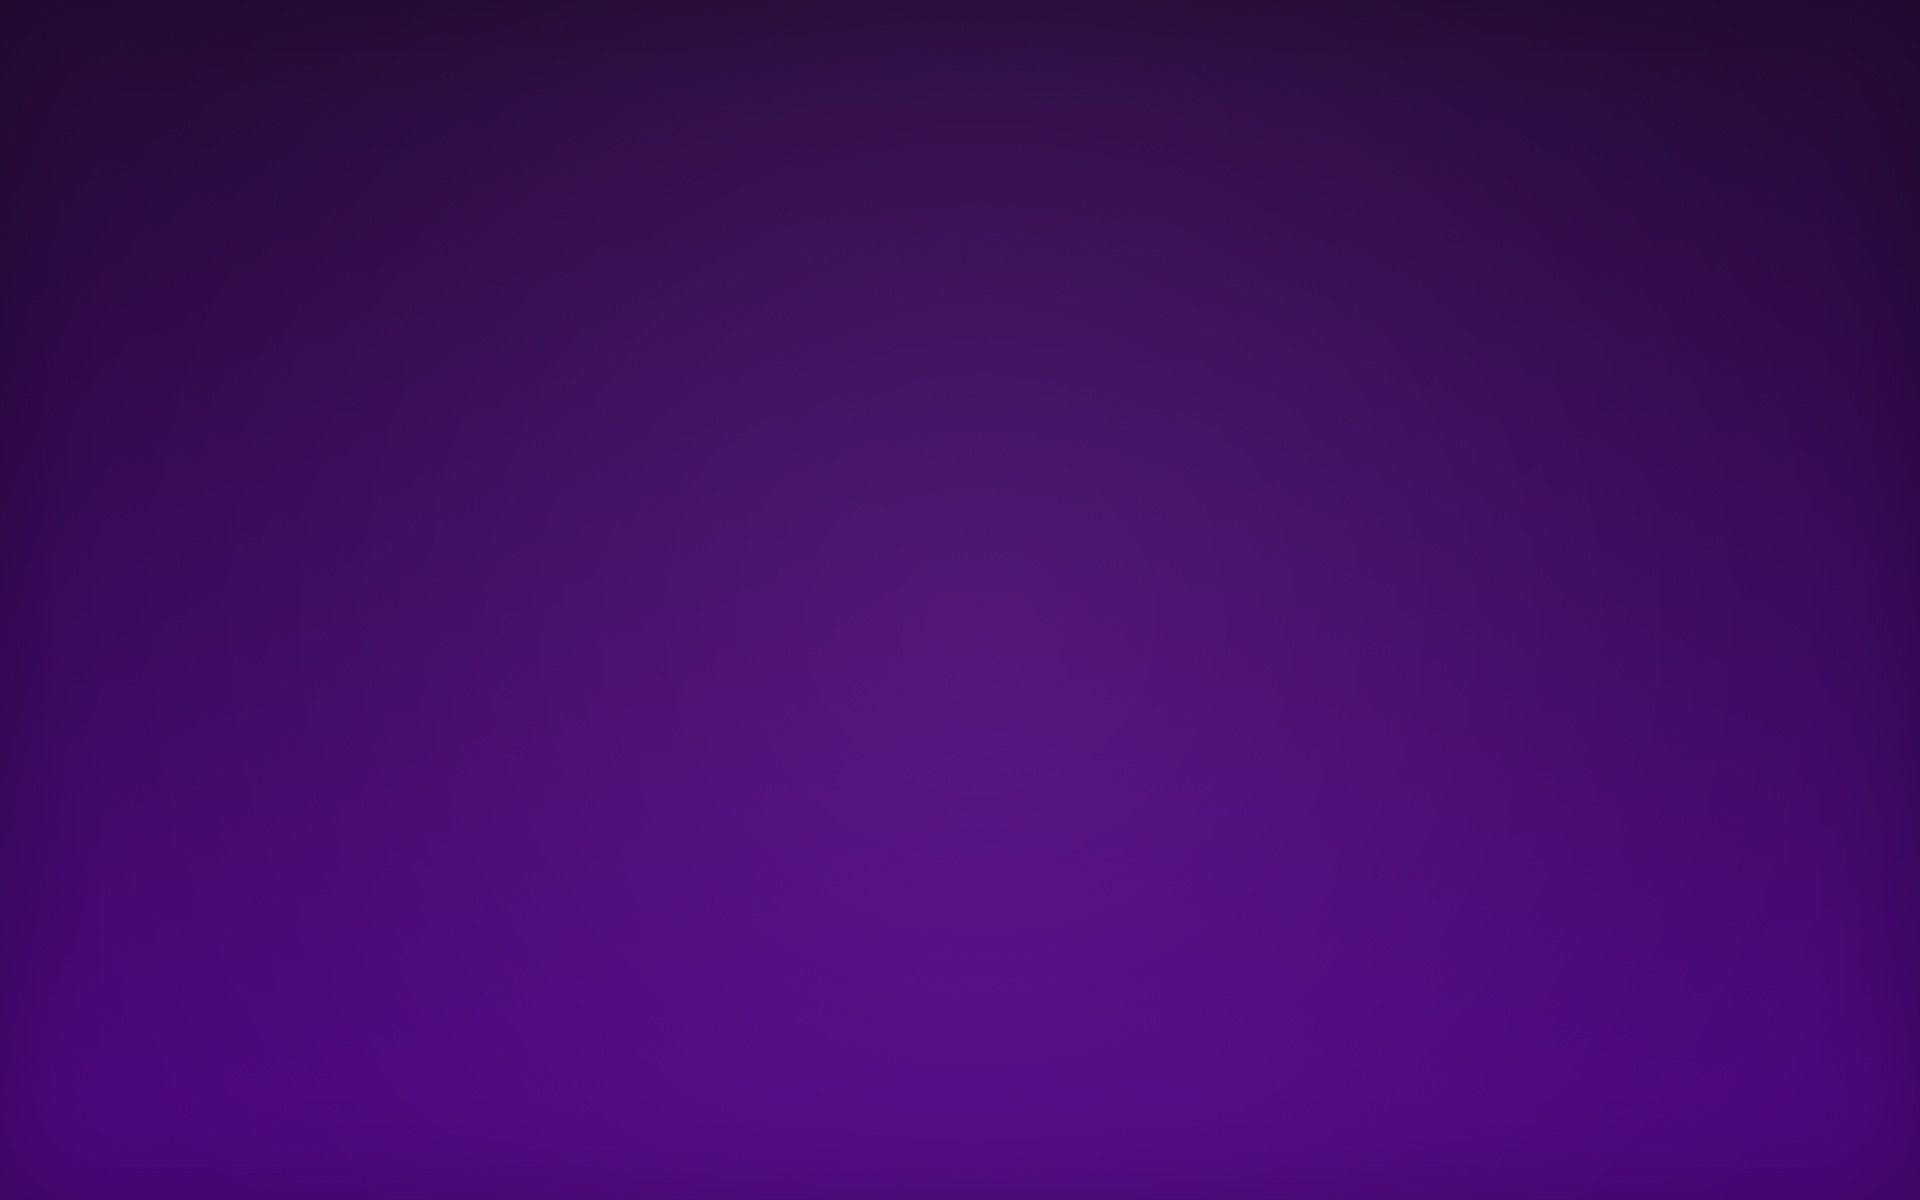 Wallpaper For > Plain Dark Purple image Background for Powerpoint